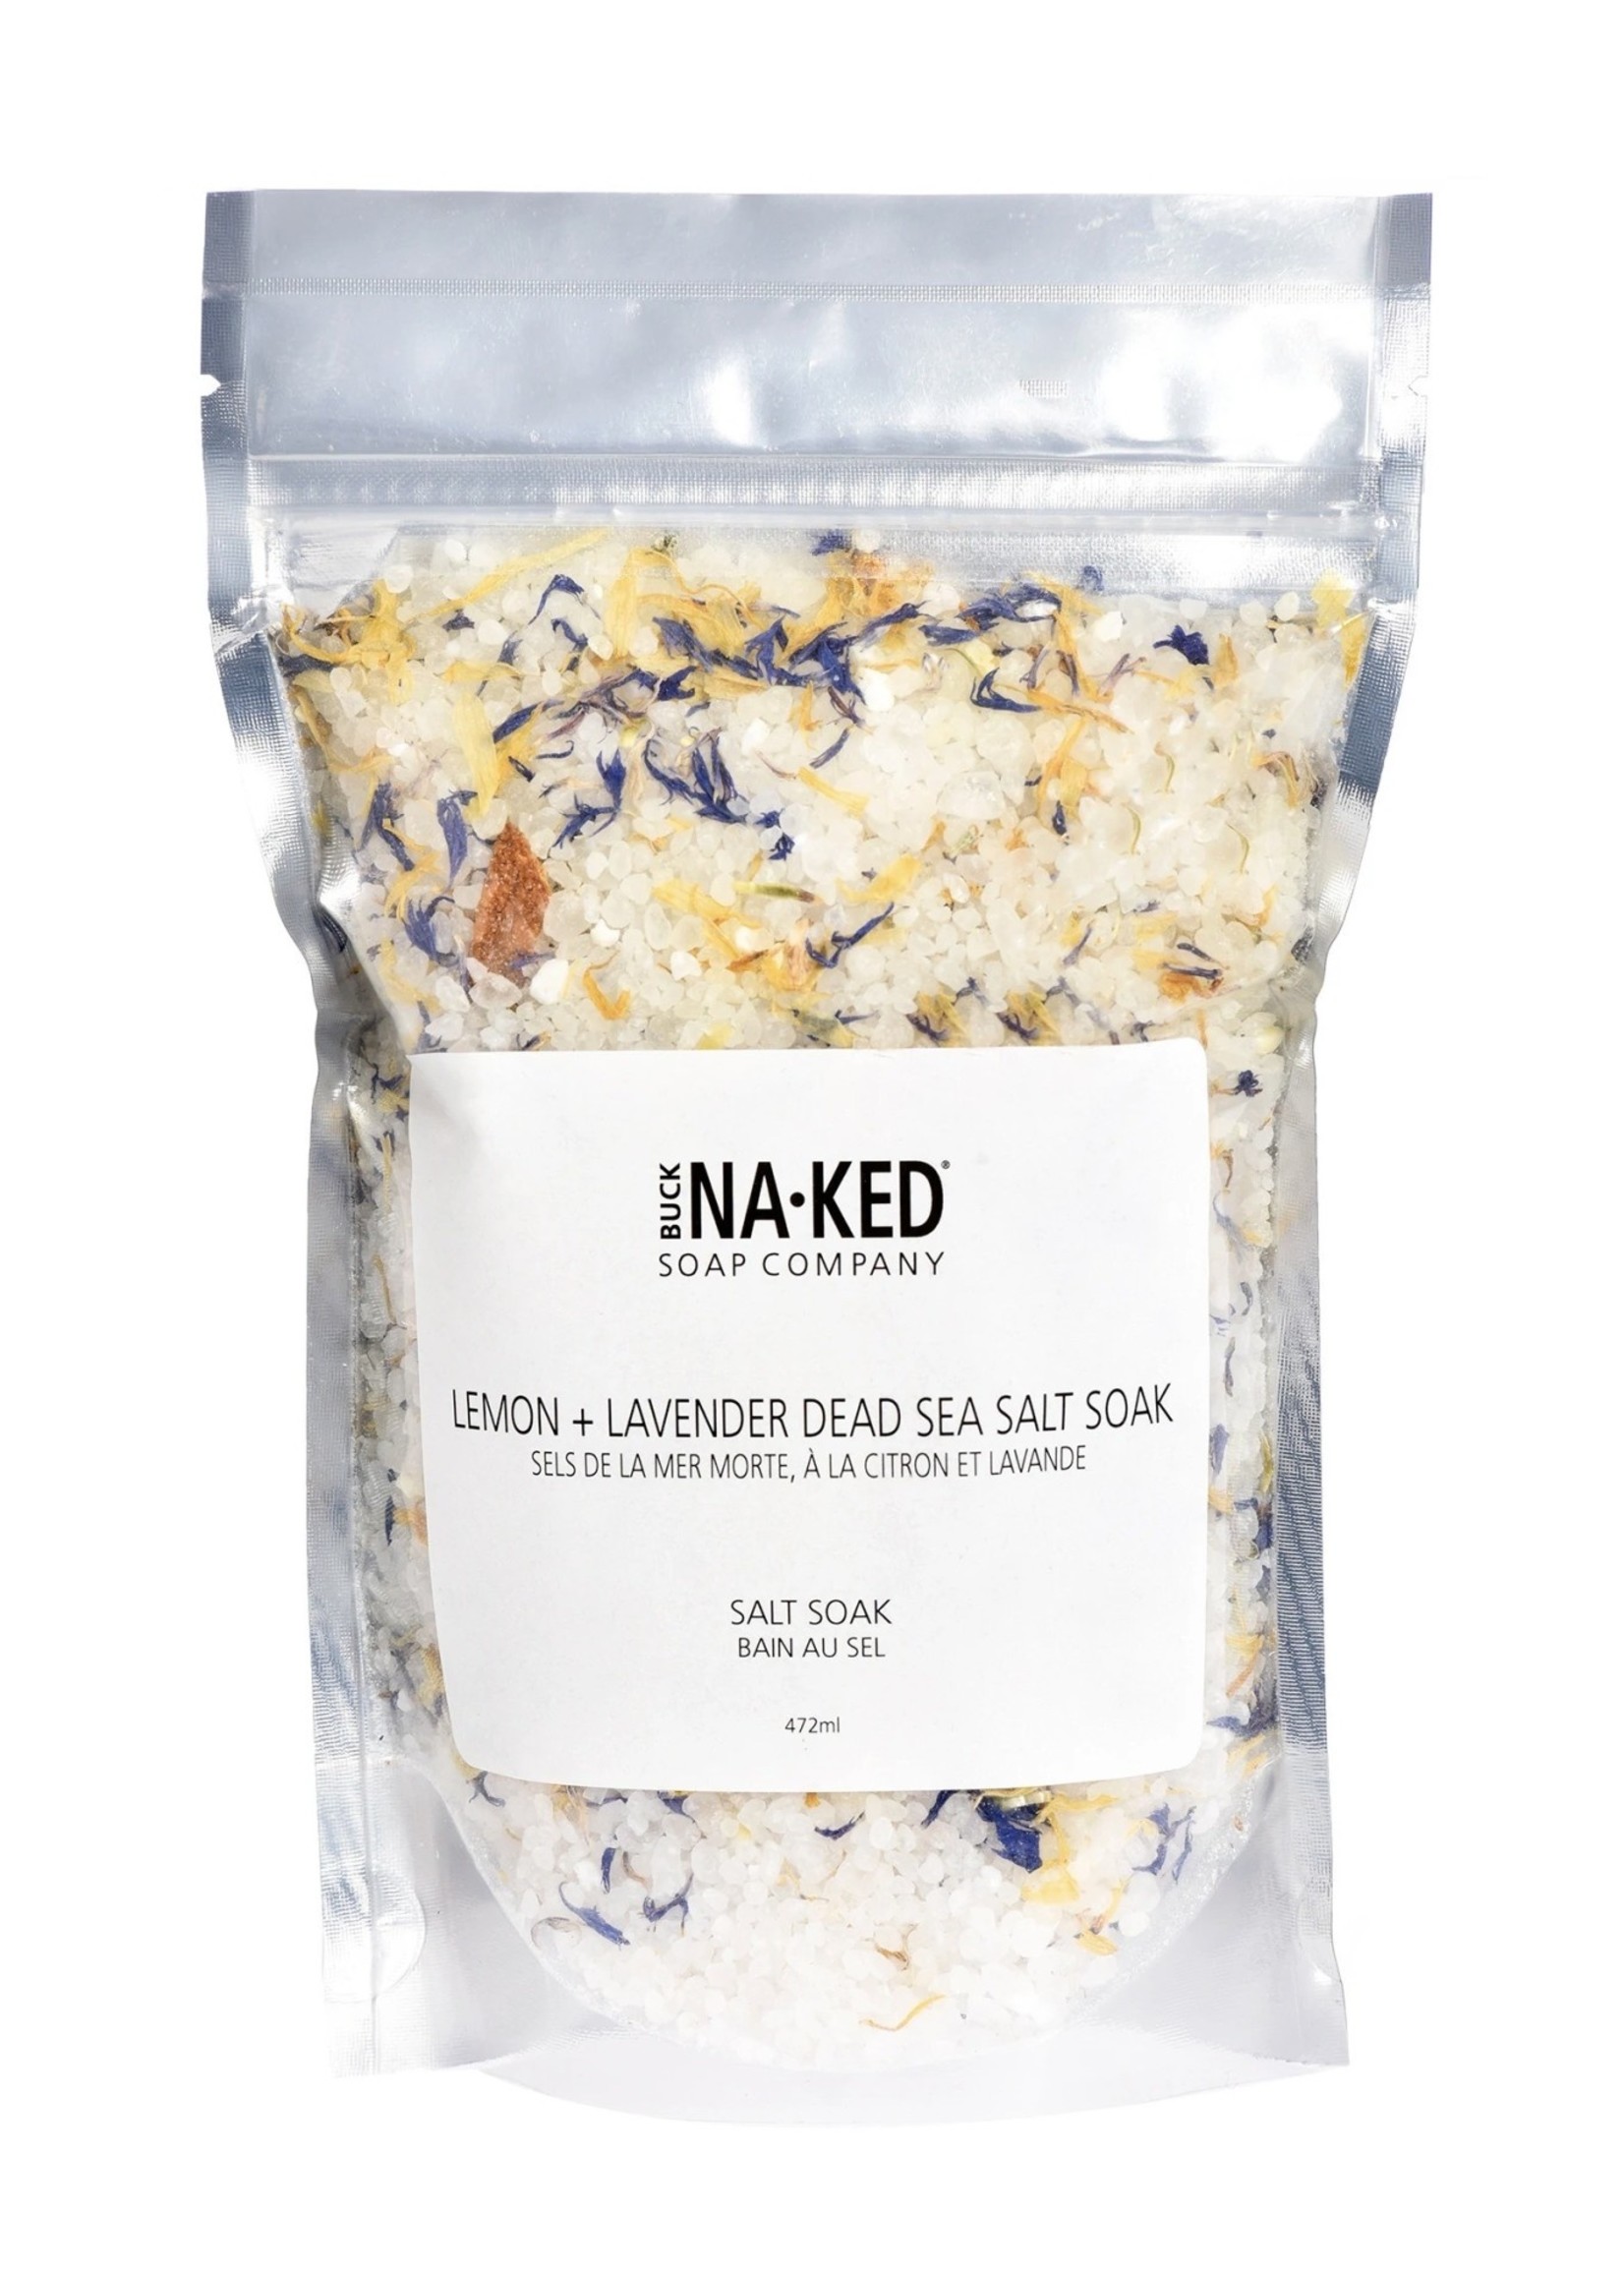 BUCK NAKED Lemon & Lavender Dead Sea SALT SOAK